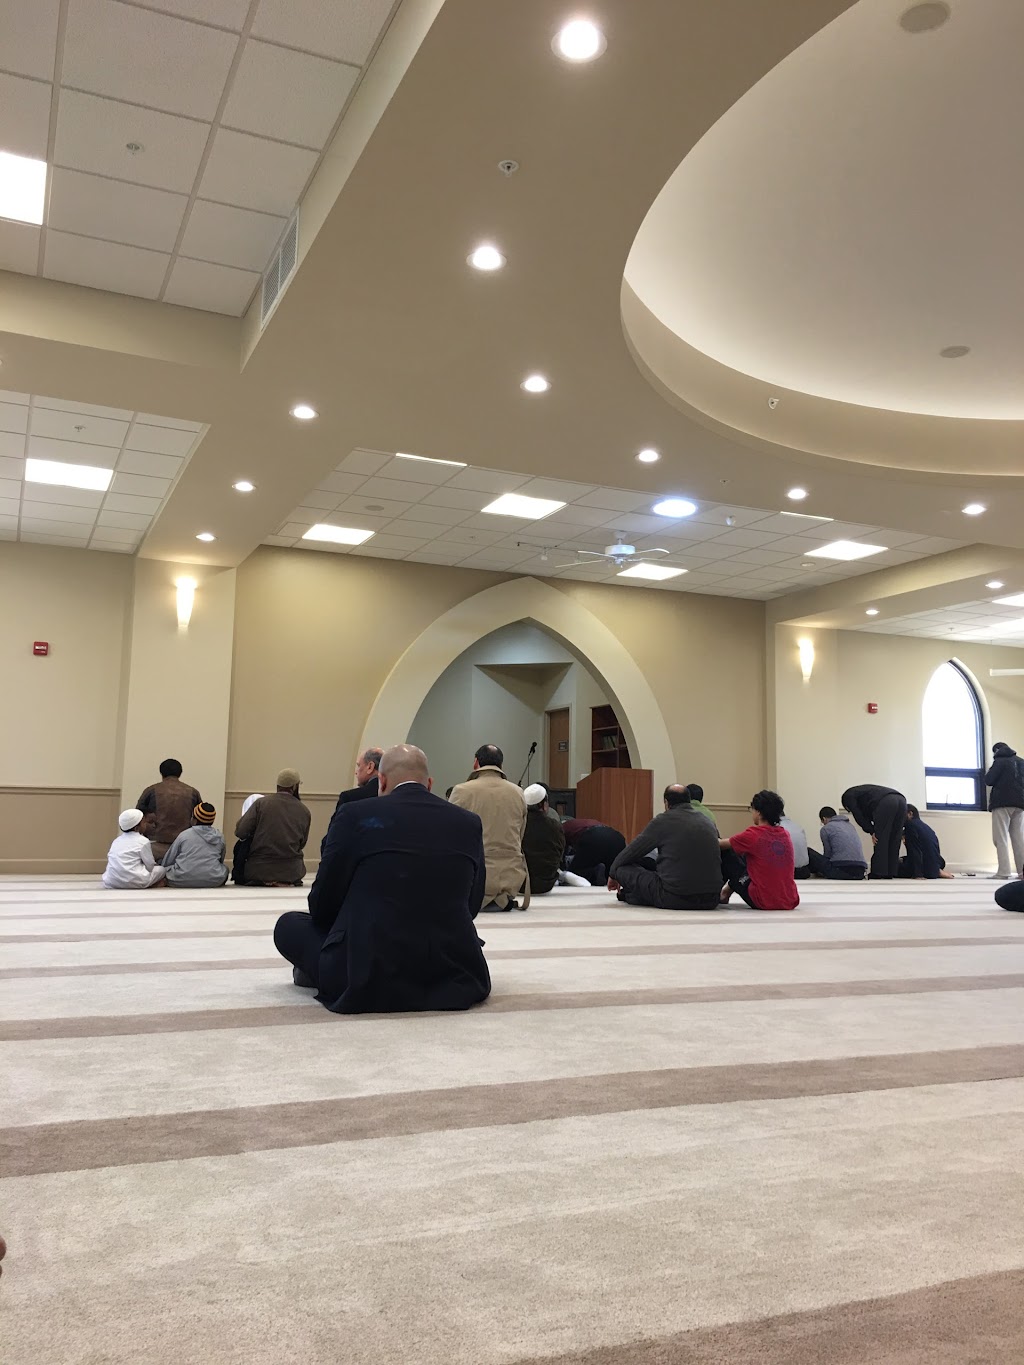 Al-Huda Mosque - Islamic Society of Greater Dayton | 730 S Alpha Bellbrook Rd, Sugarcreek Township, OH 45305, USA | Phone: (937) 705-6364